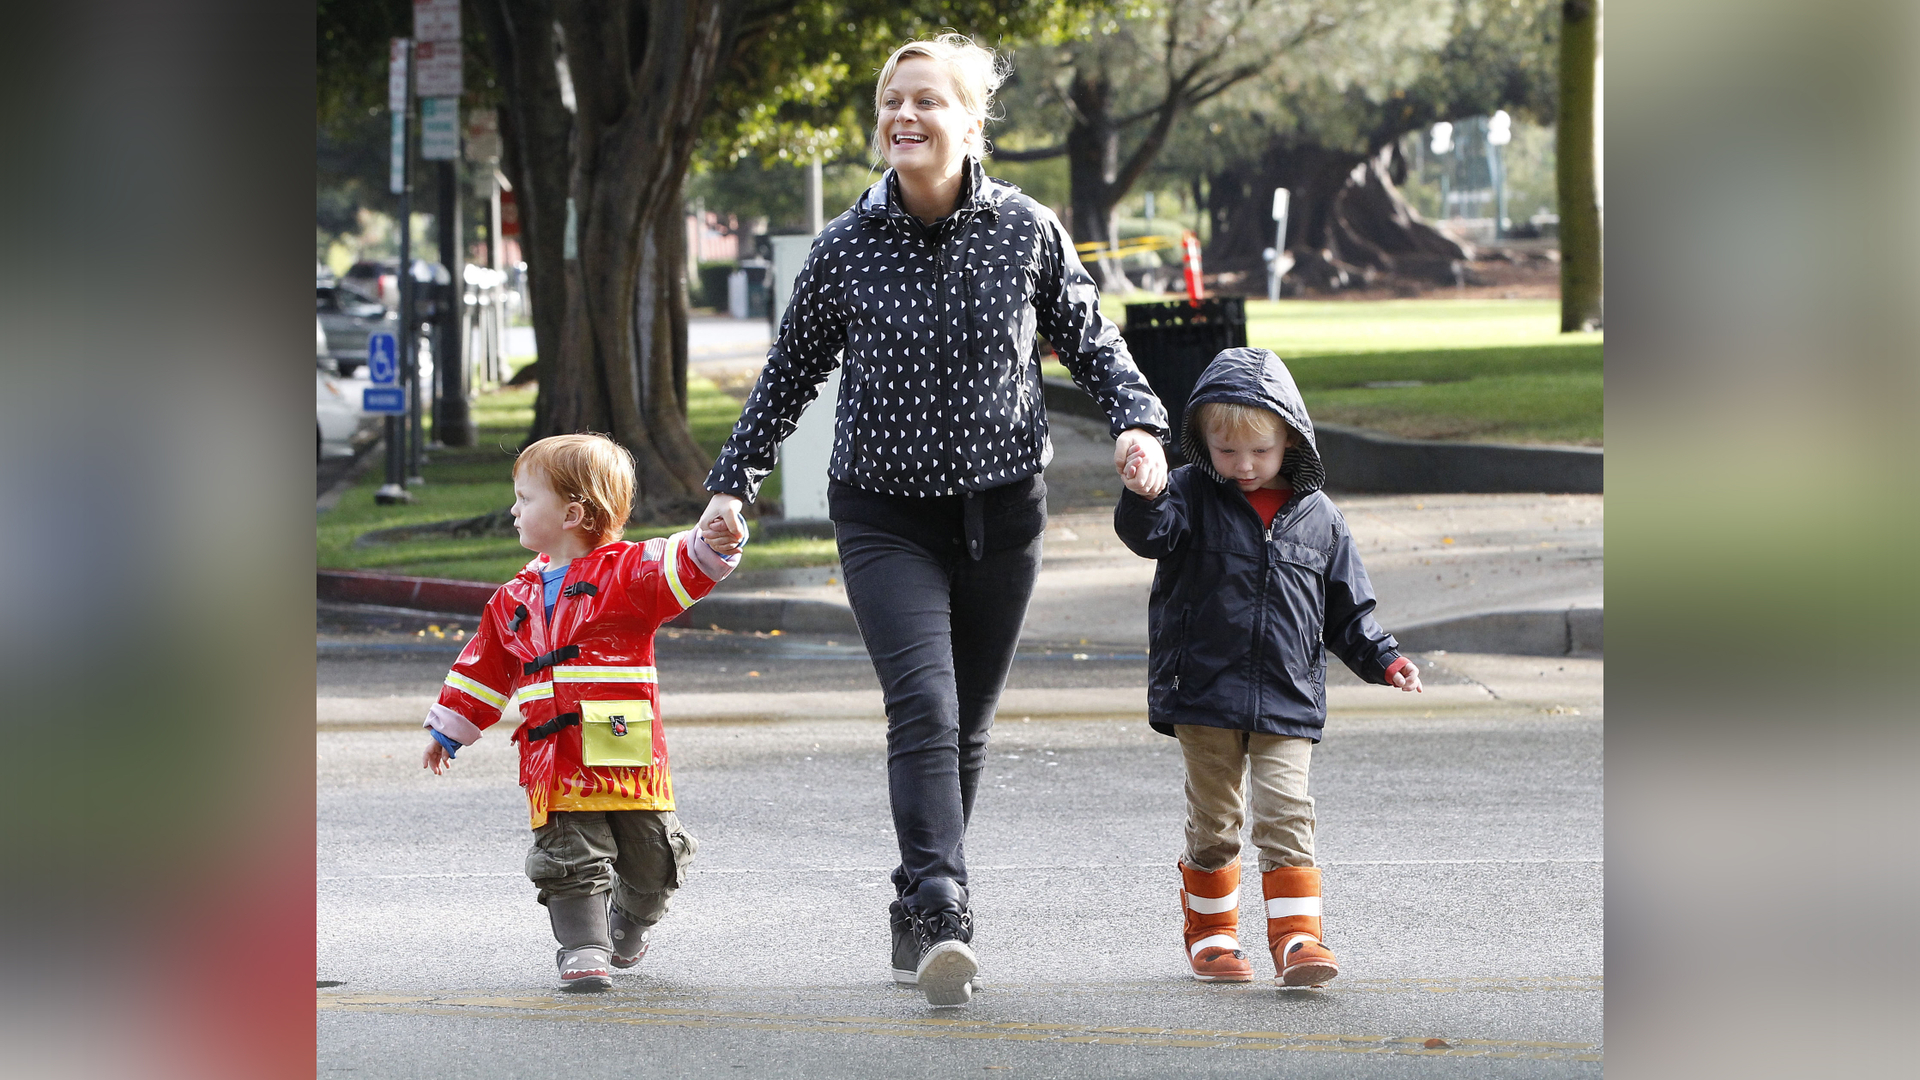 Amy Poehler with her children on a walk